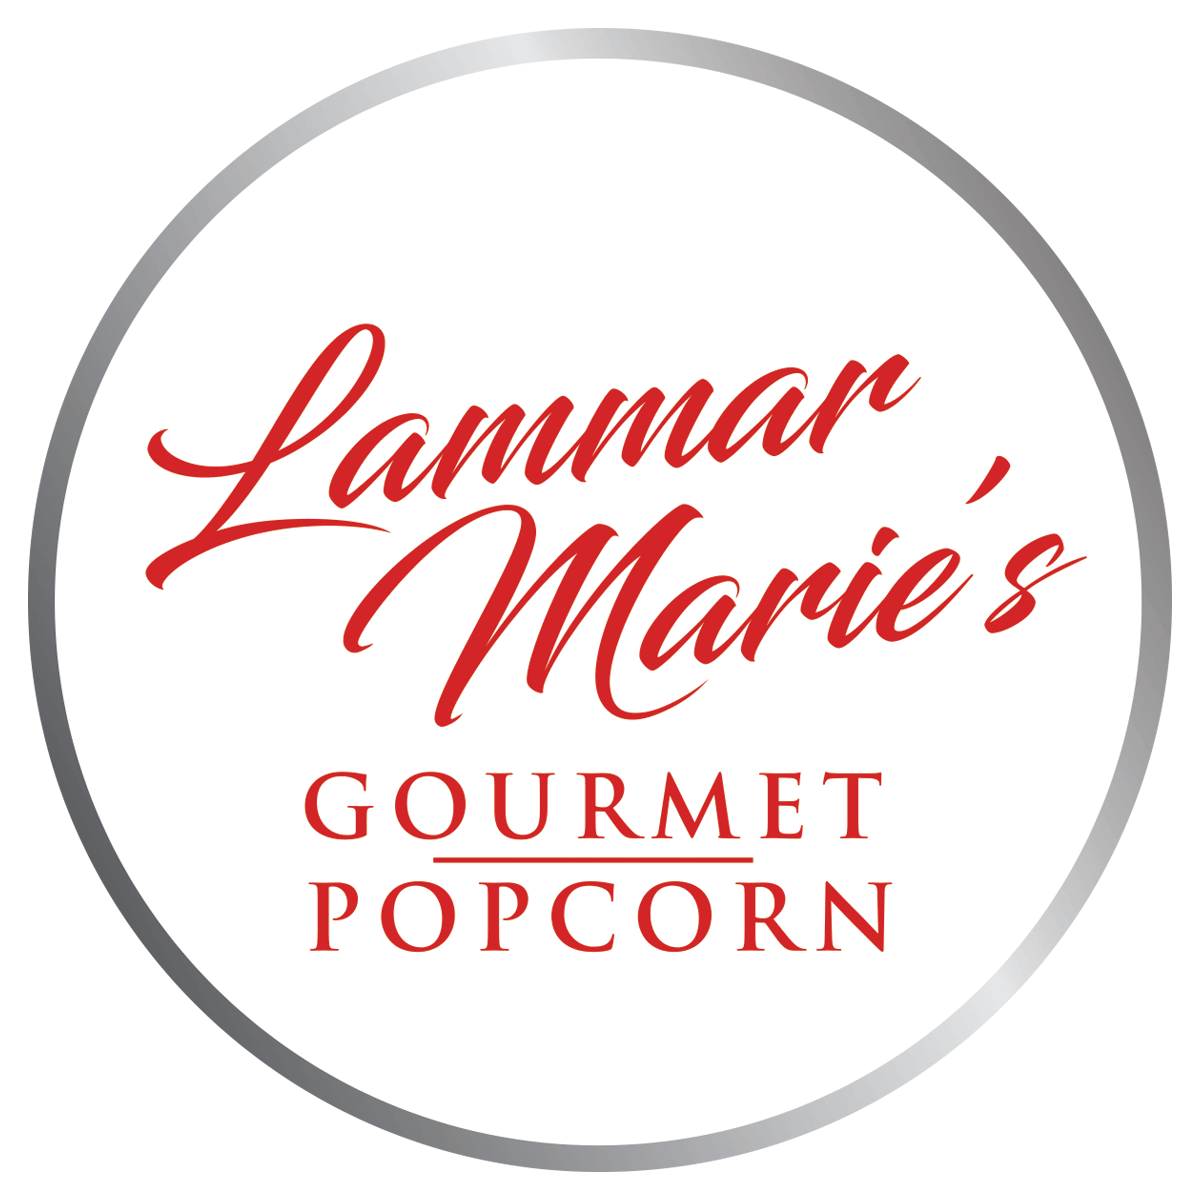 Lammar Marie's Gourmet Popcorn, LLC